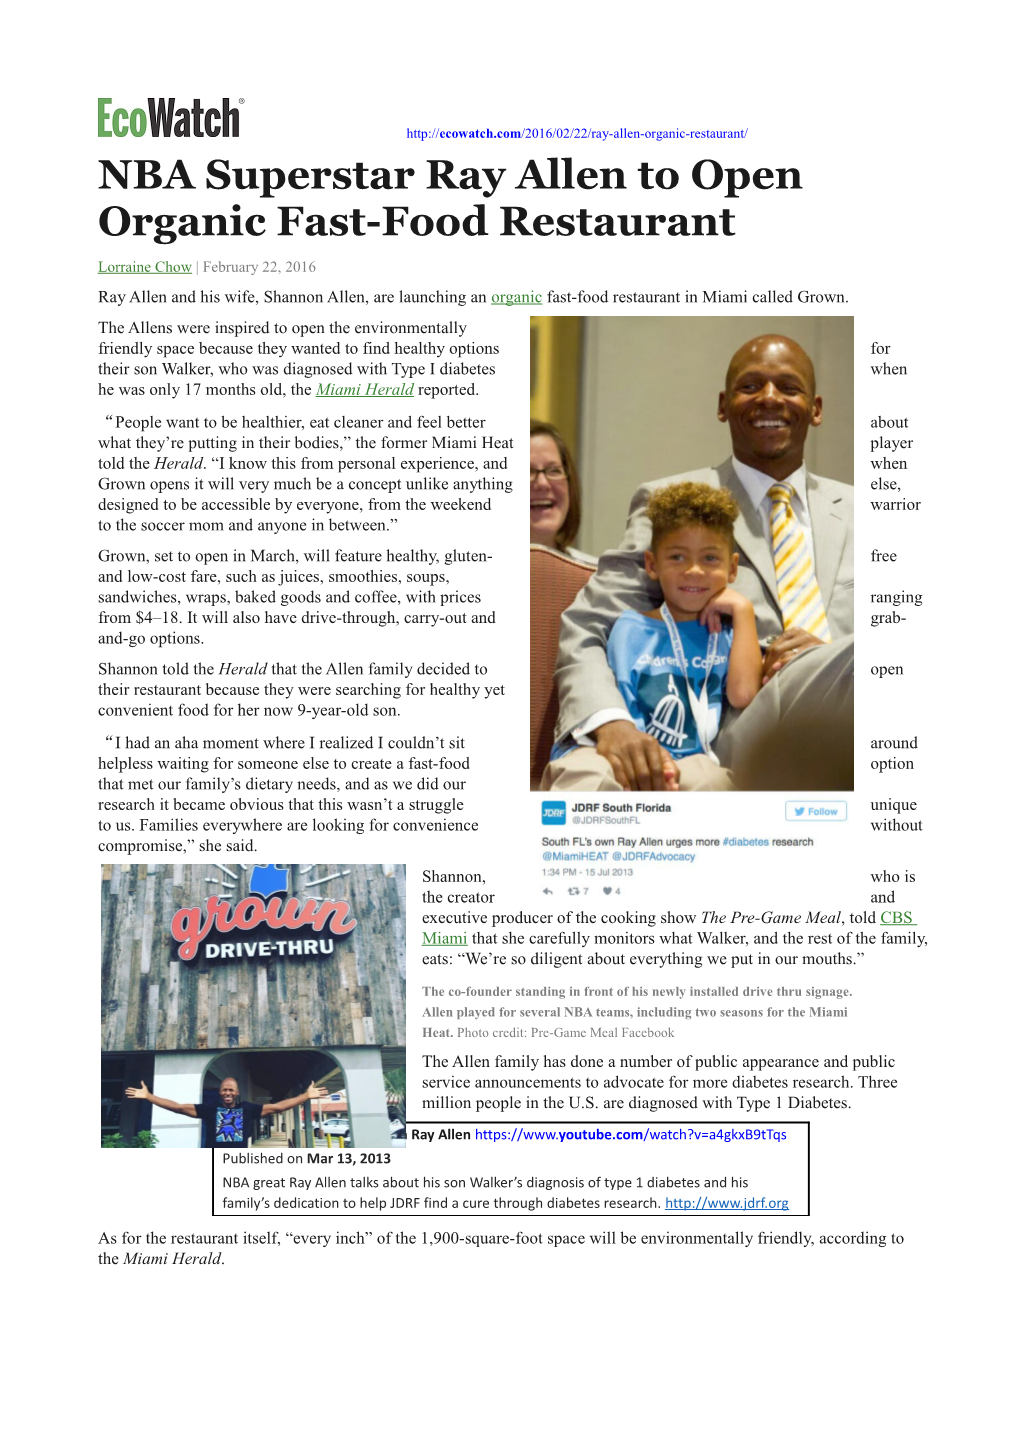 NBA Superstar Ray Allen to Open Organic Fast-Food Restaurant